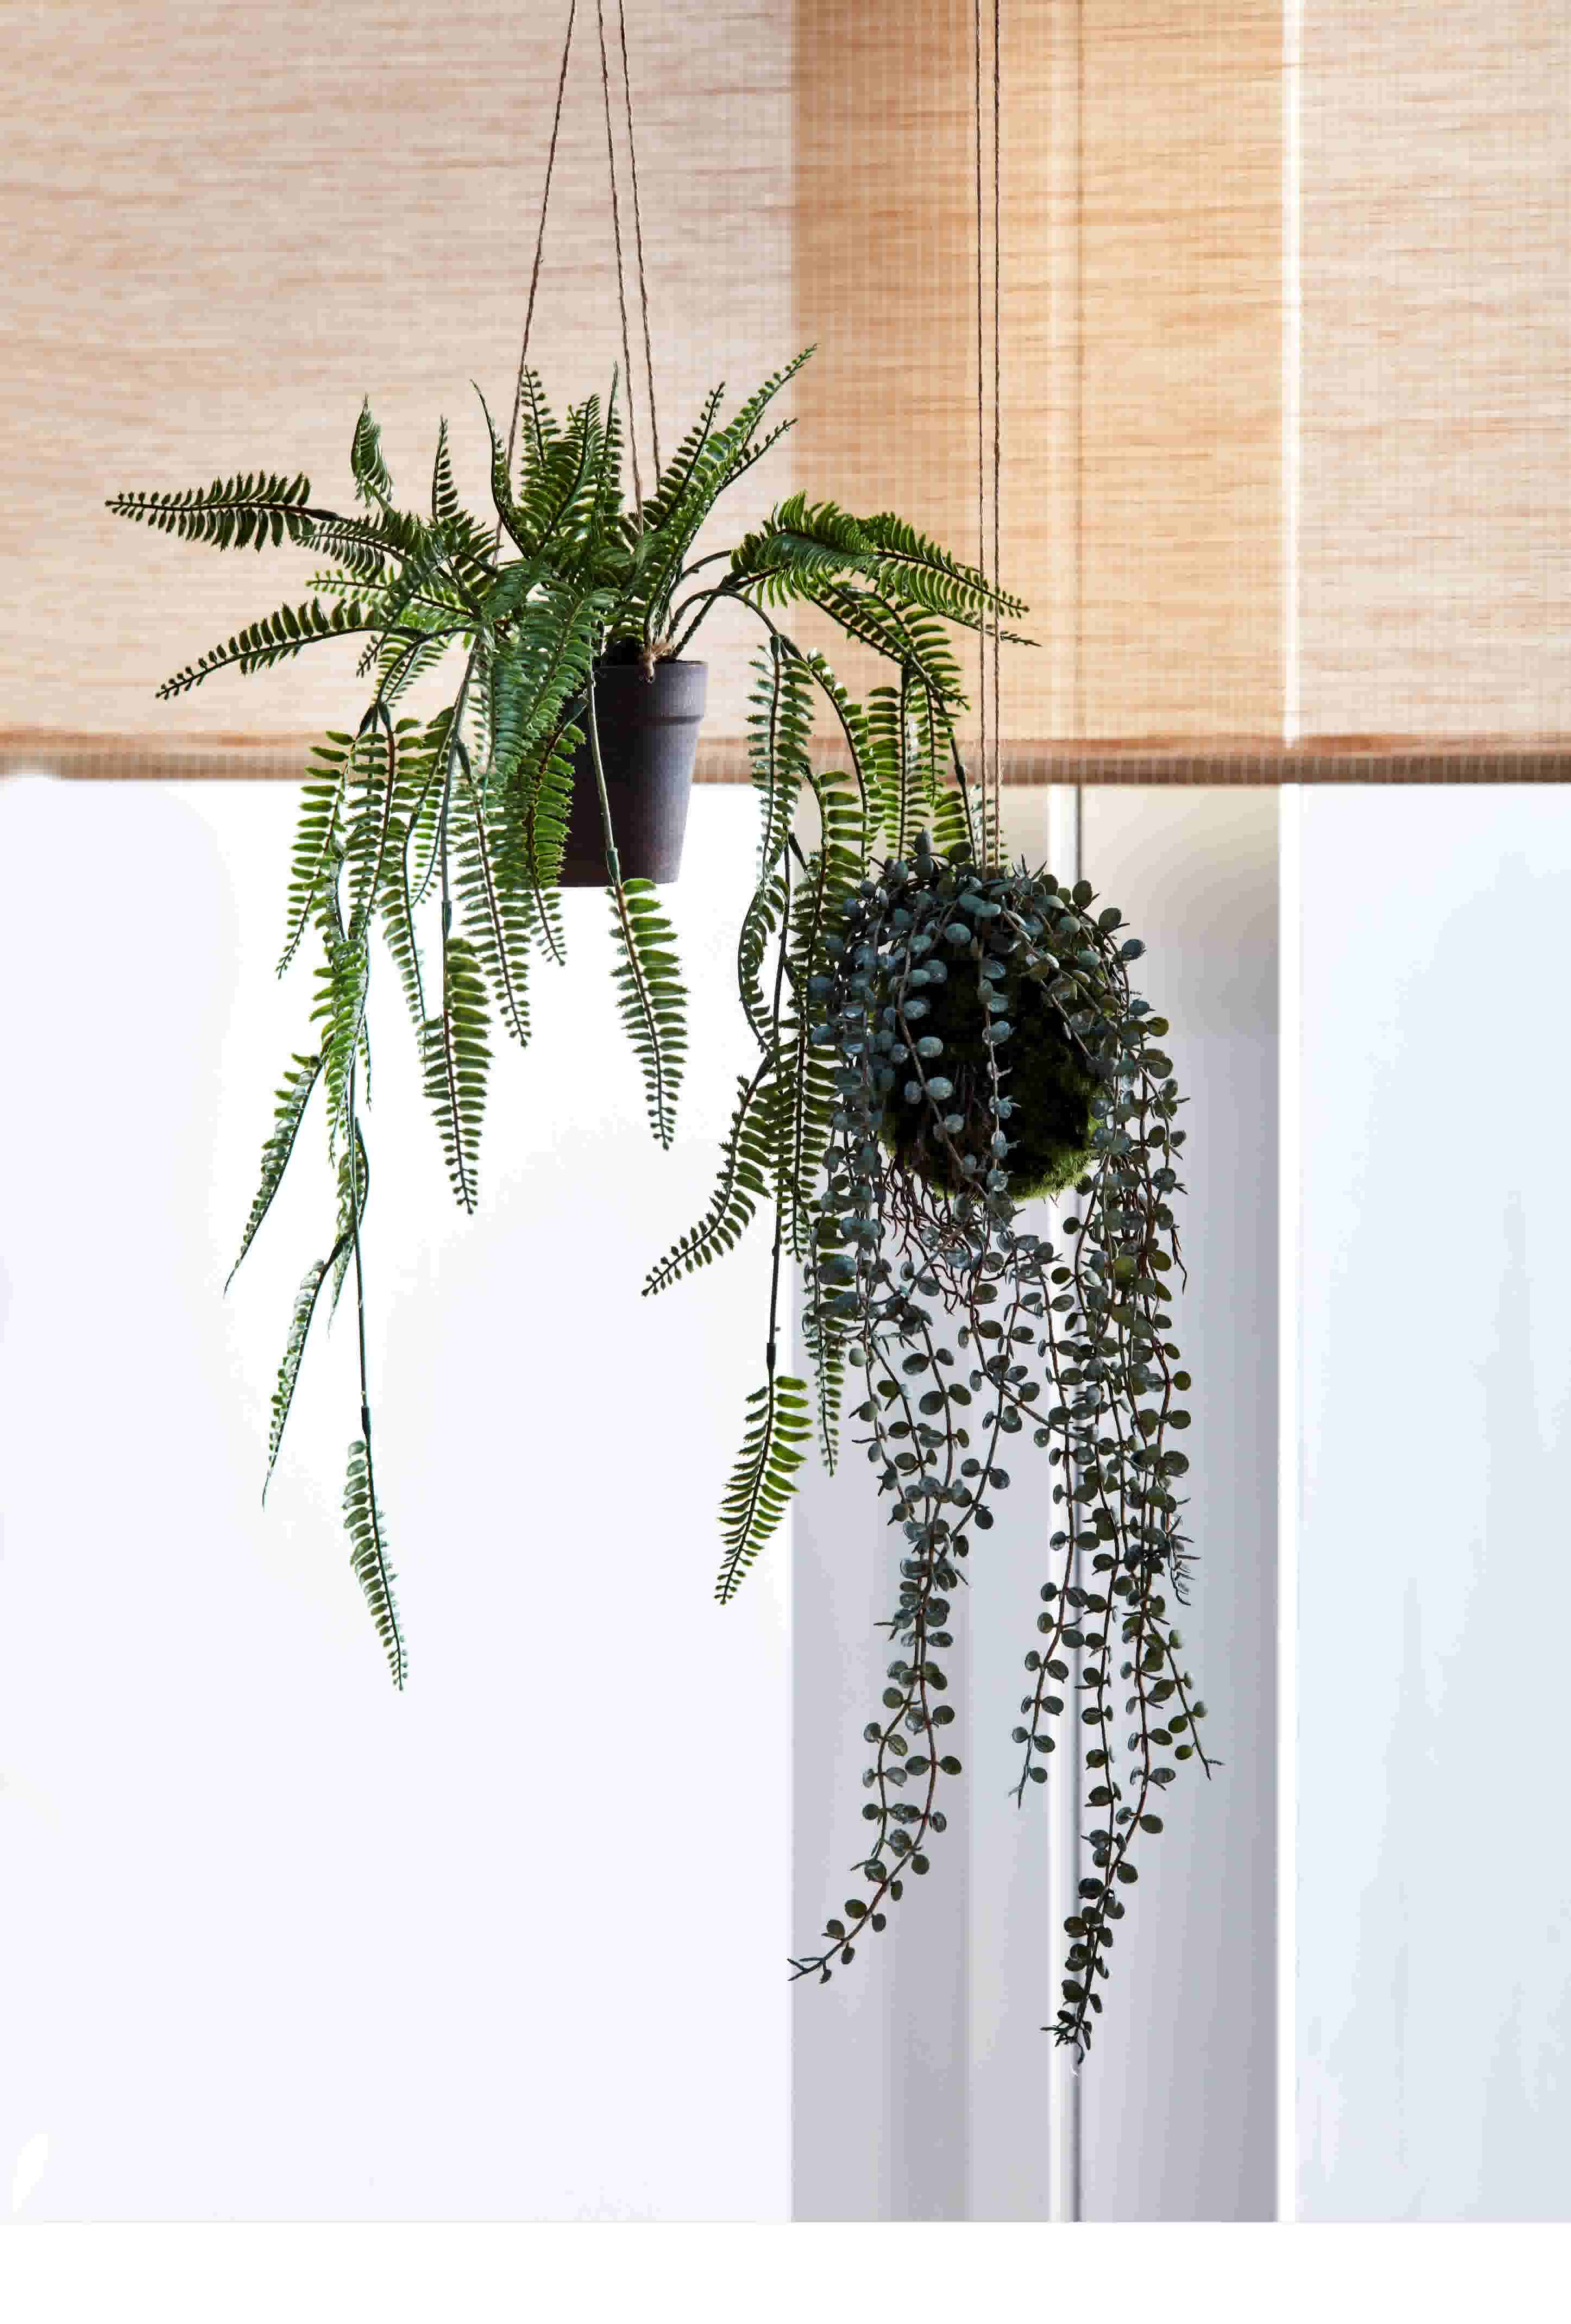 Gebakjes shit Zuinig Groen in huis: woonkamer stylen met kamerplanten | Karwei